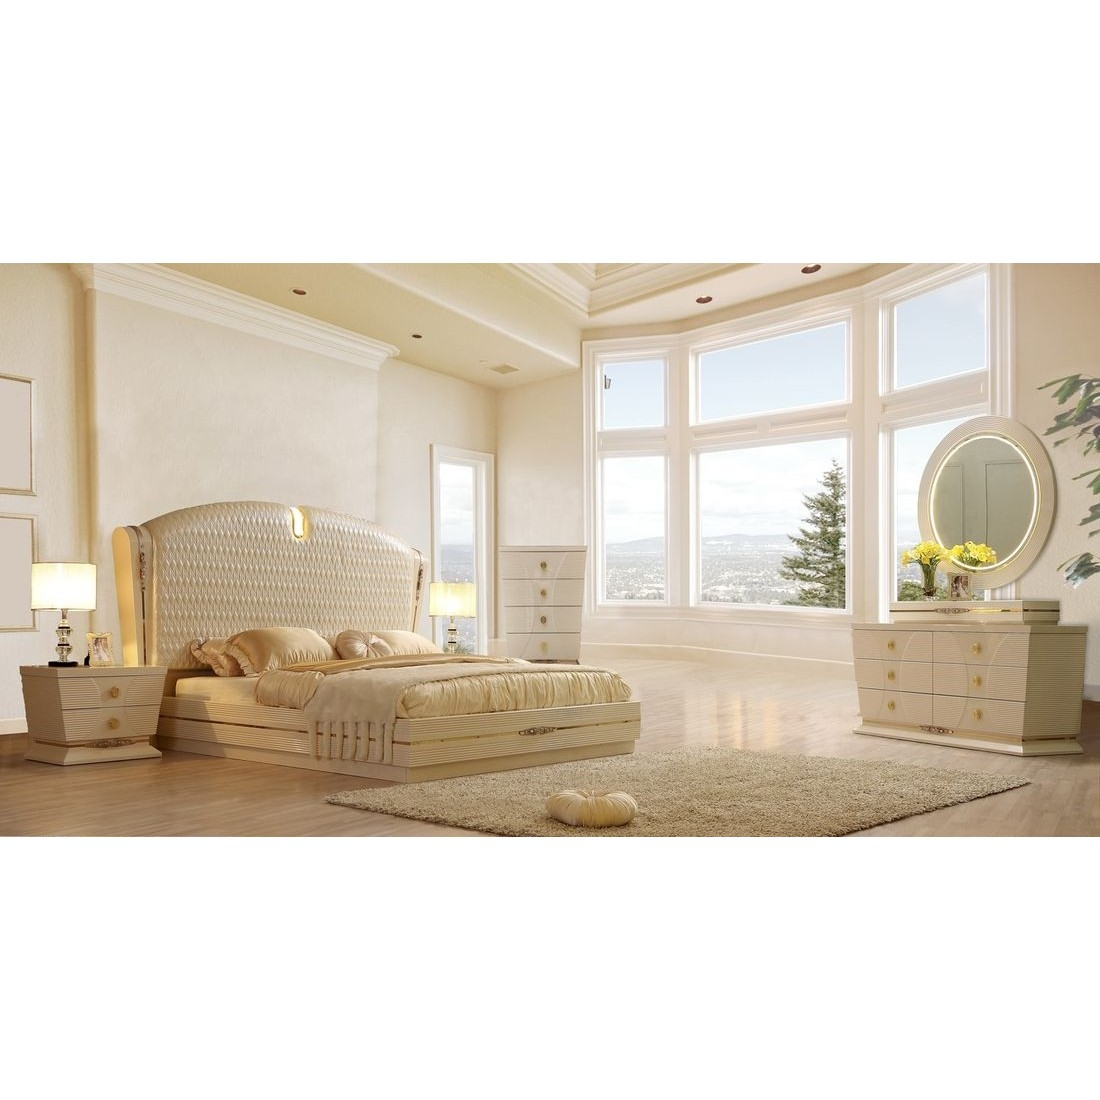 Homey Design Hd 914 4pc Eastern King Bedroom Set regarding dimensions 1100 X 1100